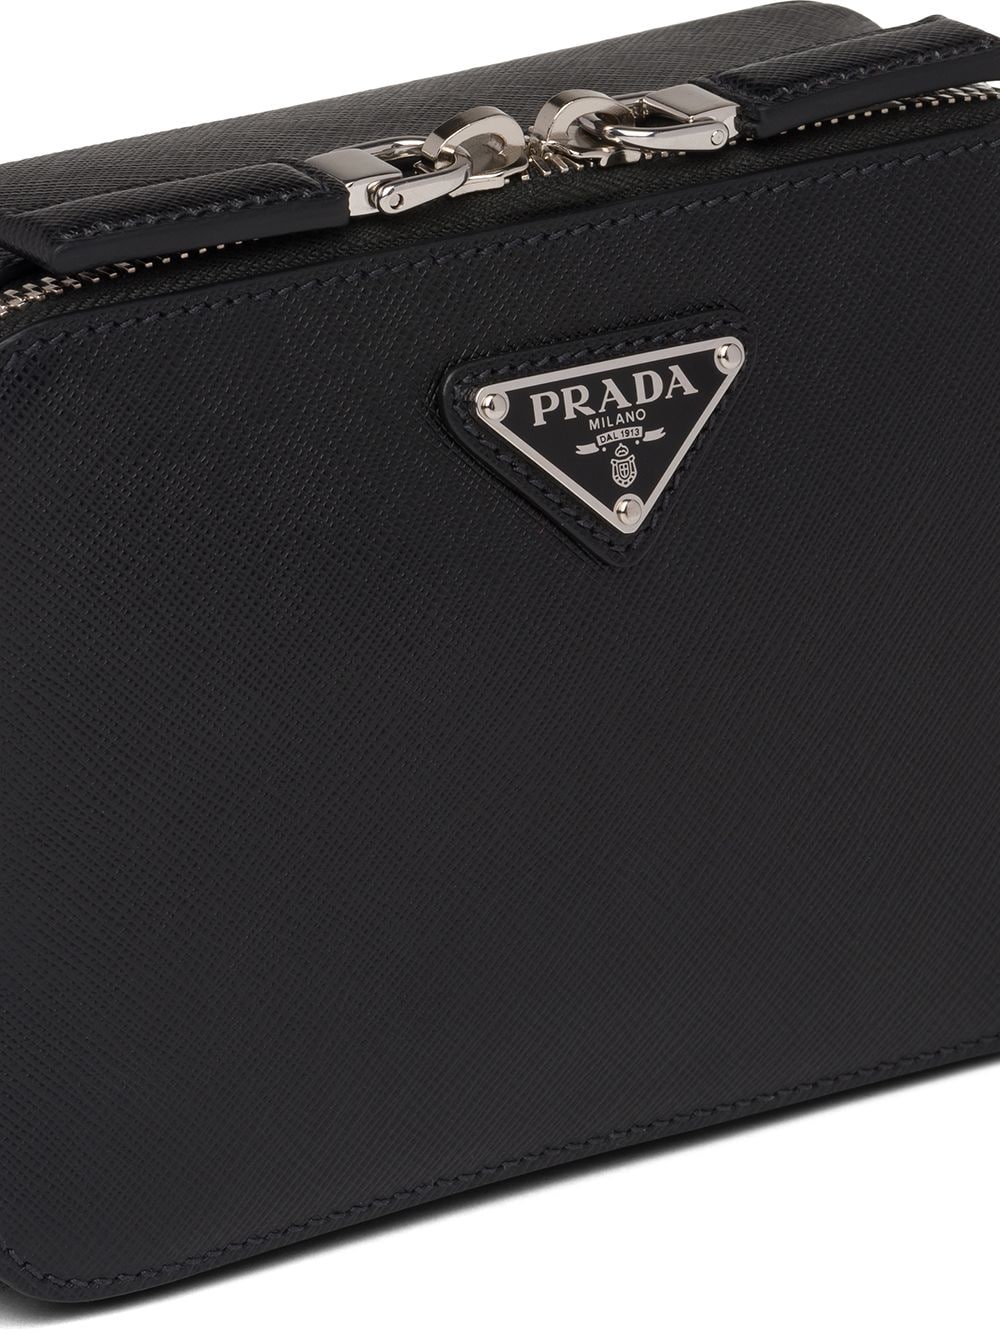 фото Prada сумка-мессенджер с логотипом